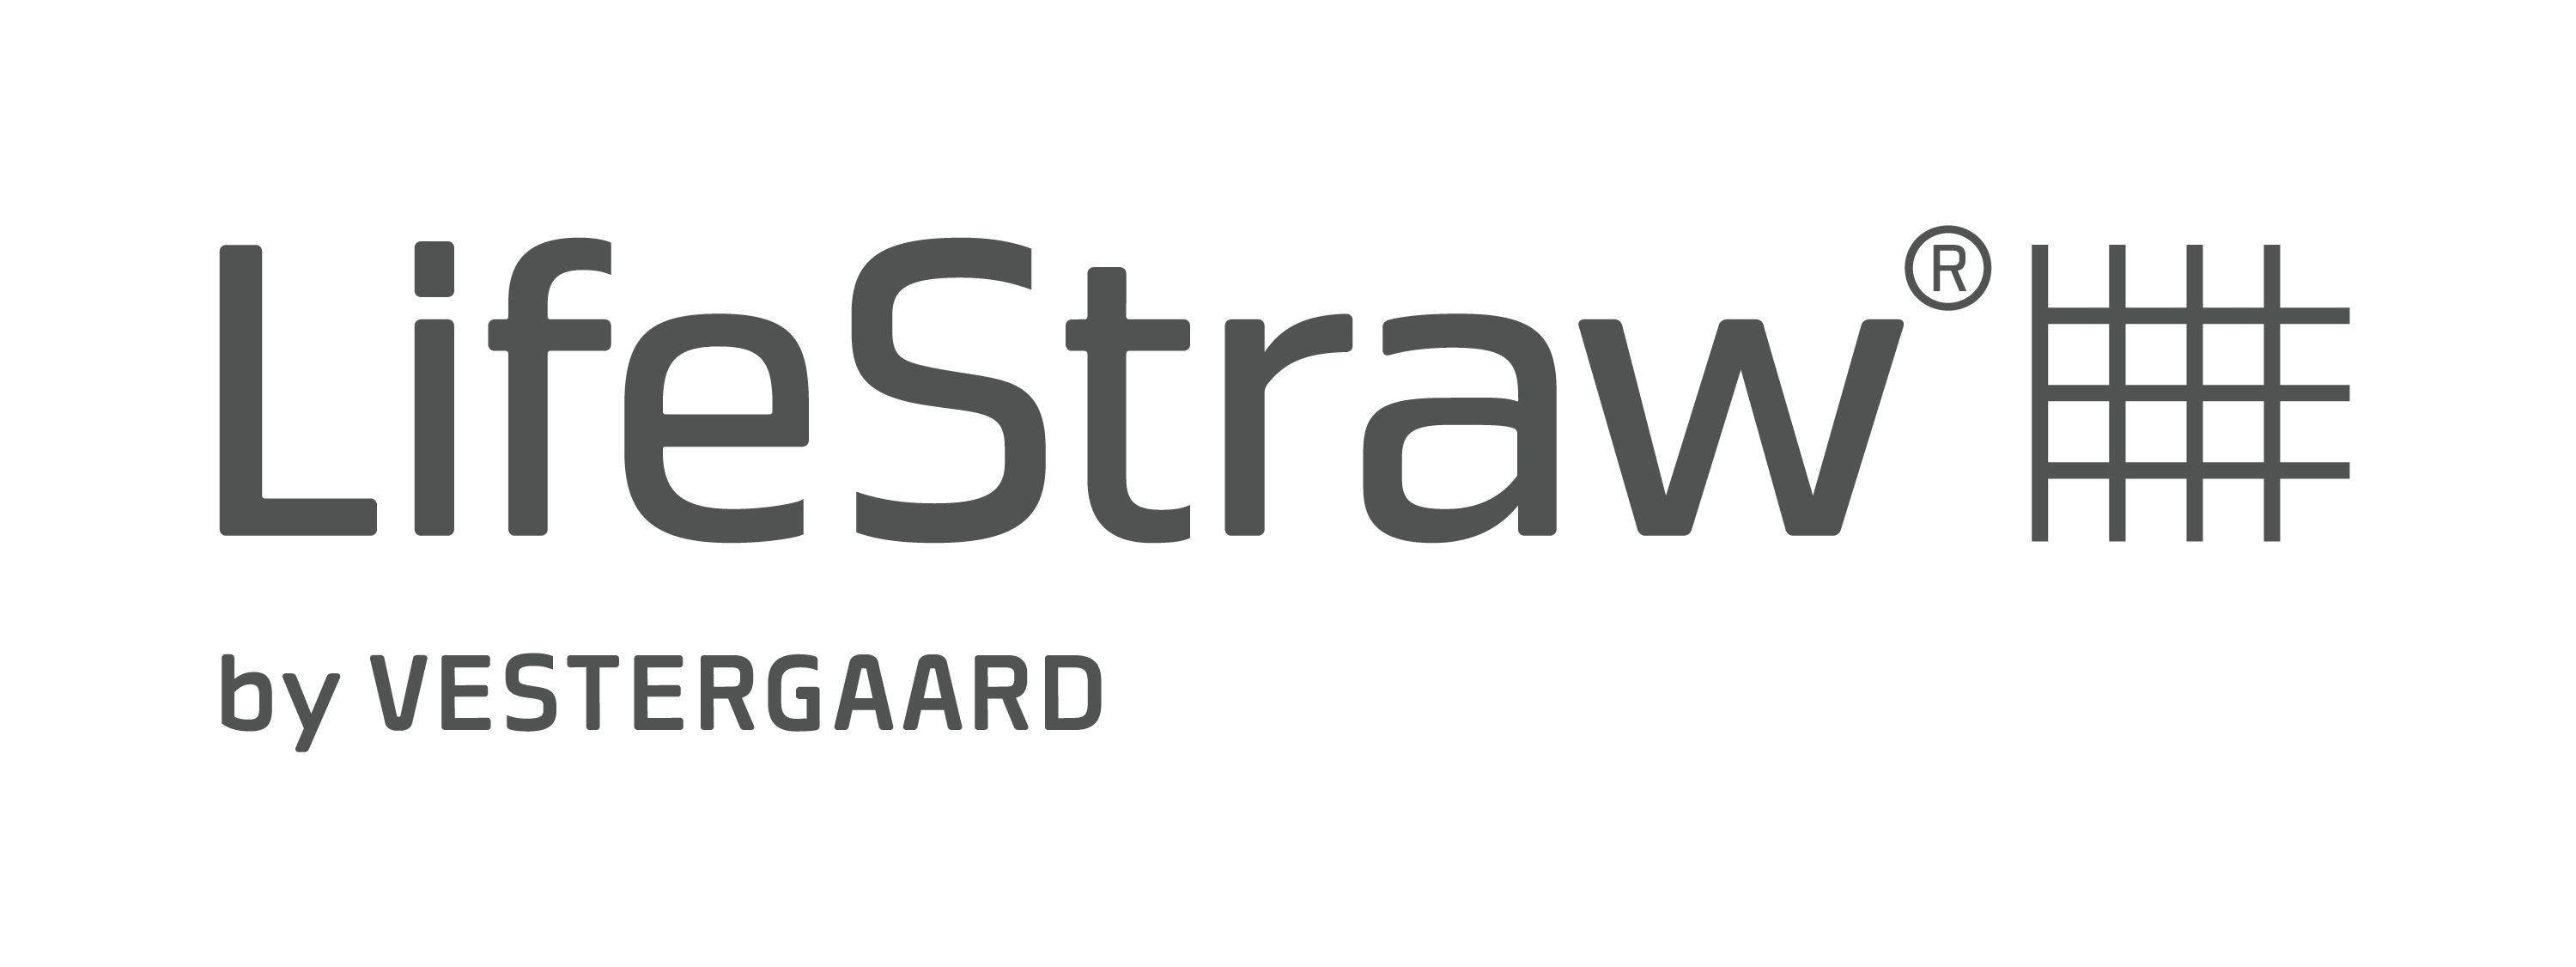 Life straw logo